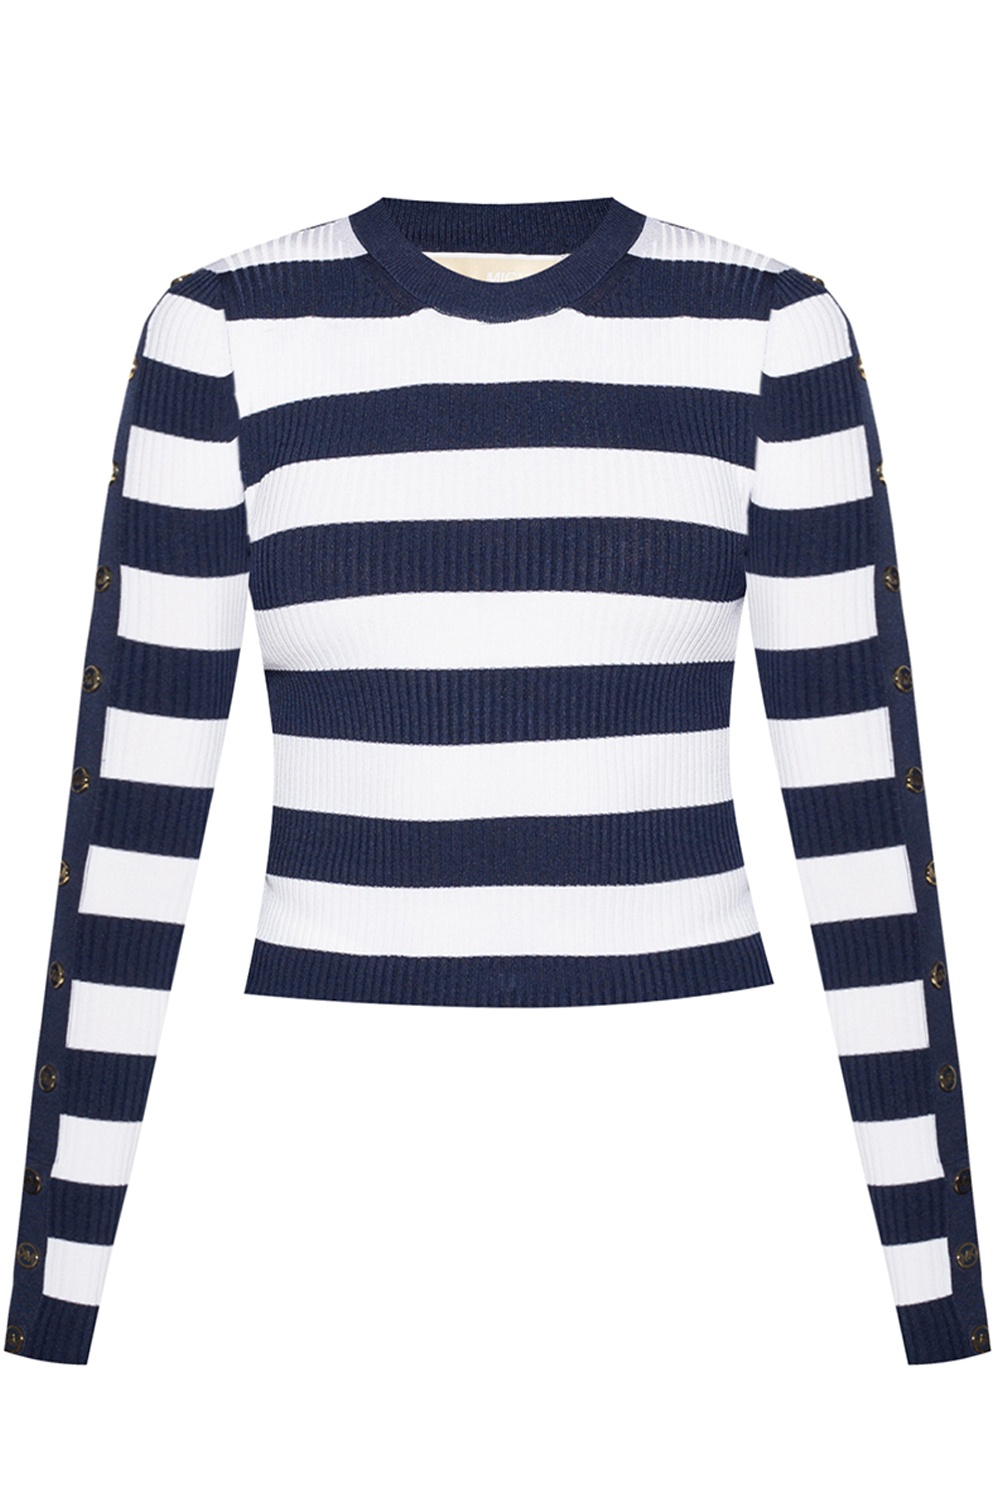 michael kors striped sweater